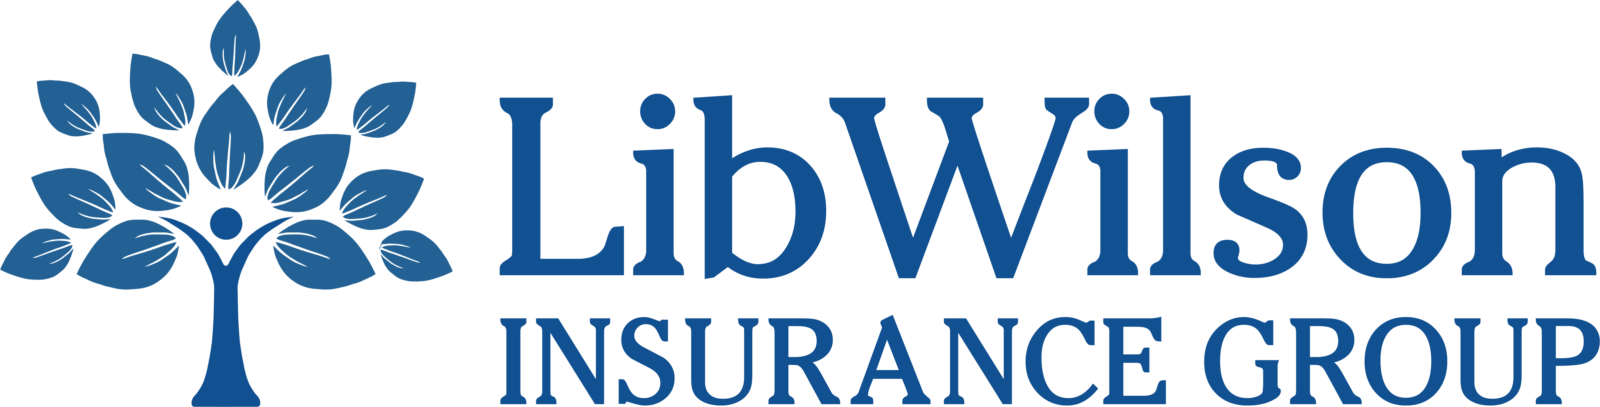 Lib Wilson Insurance Group, Nicholasville